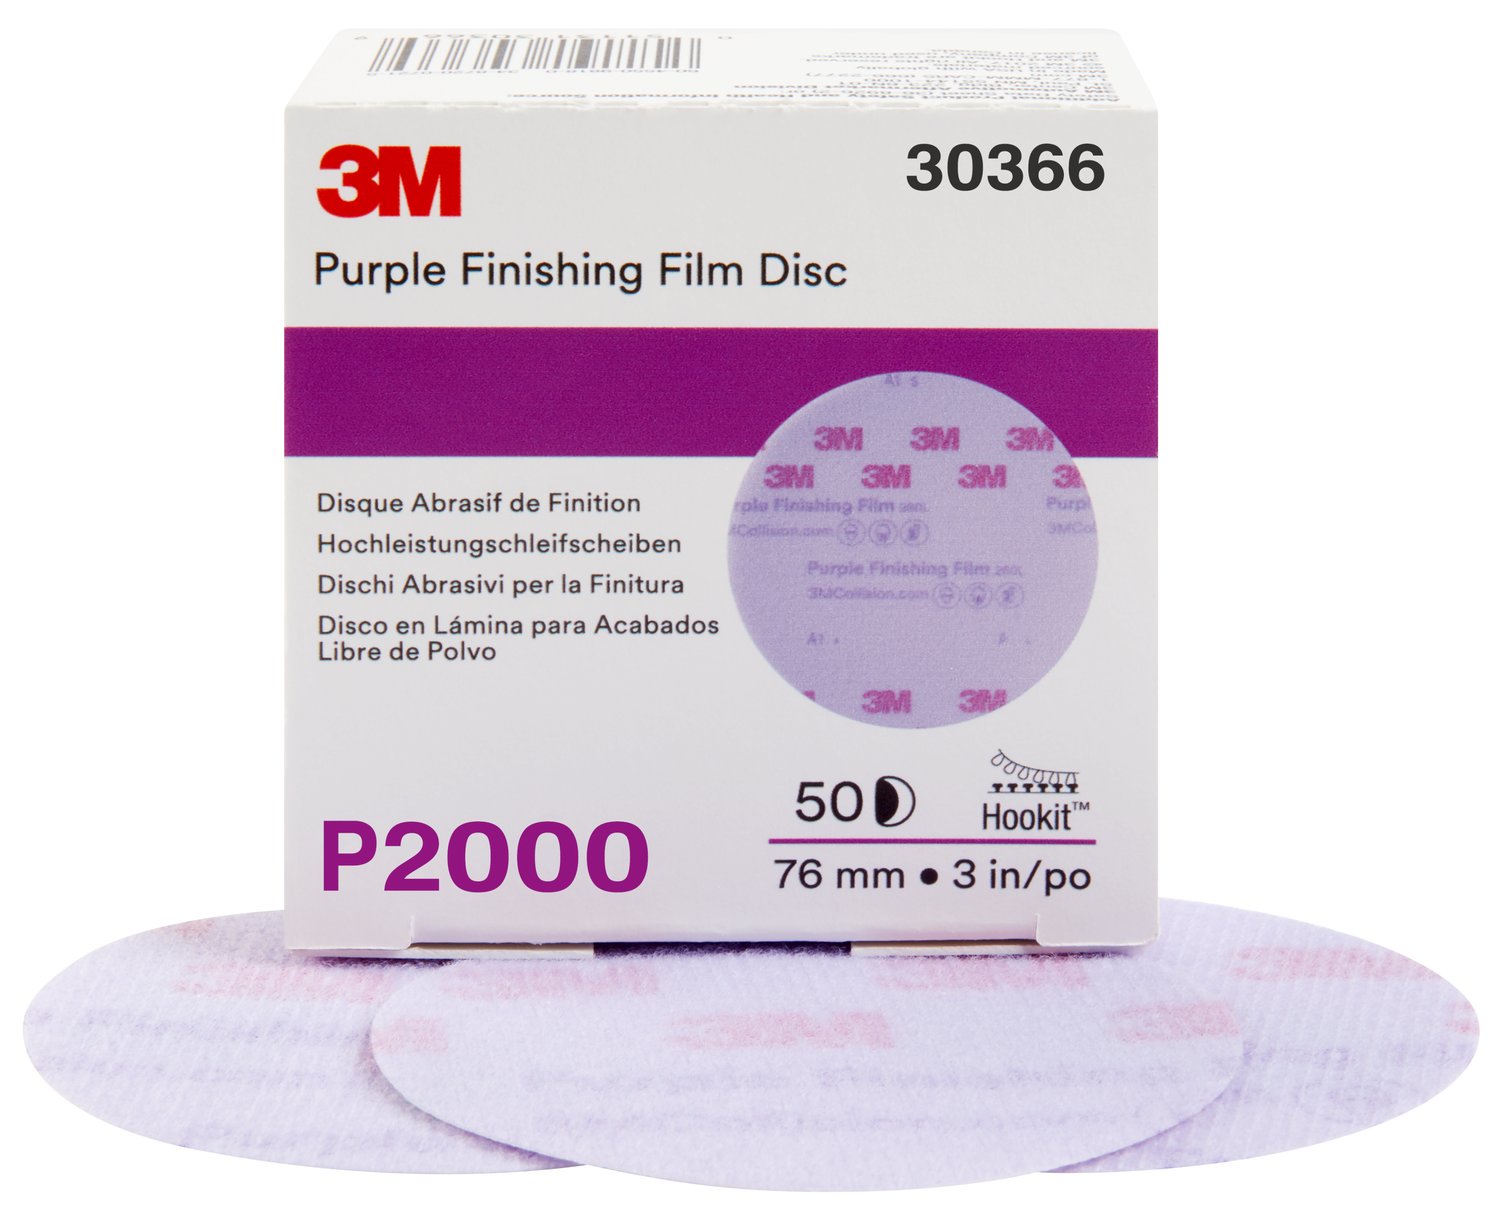 7100122772 - 3M Hookit Purple Finishing Film Abrasive Disc 260L, 30366, 3 in,
P2000, 50 discs per carton, 4 cartons per case